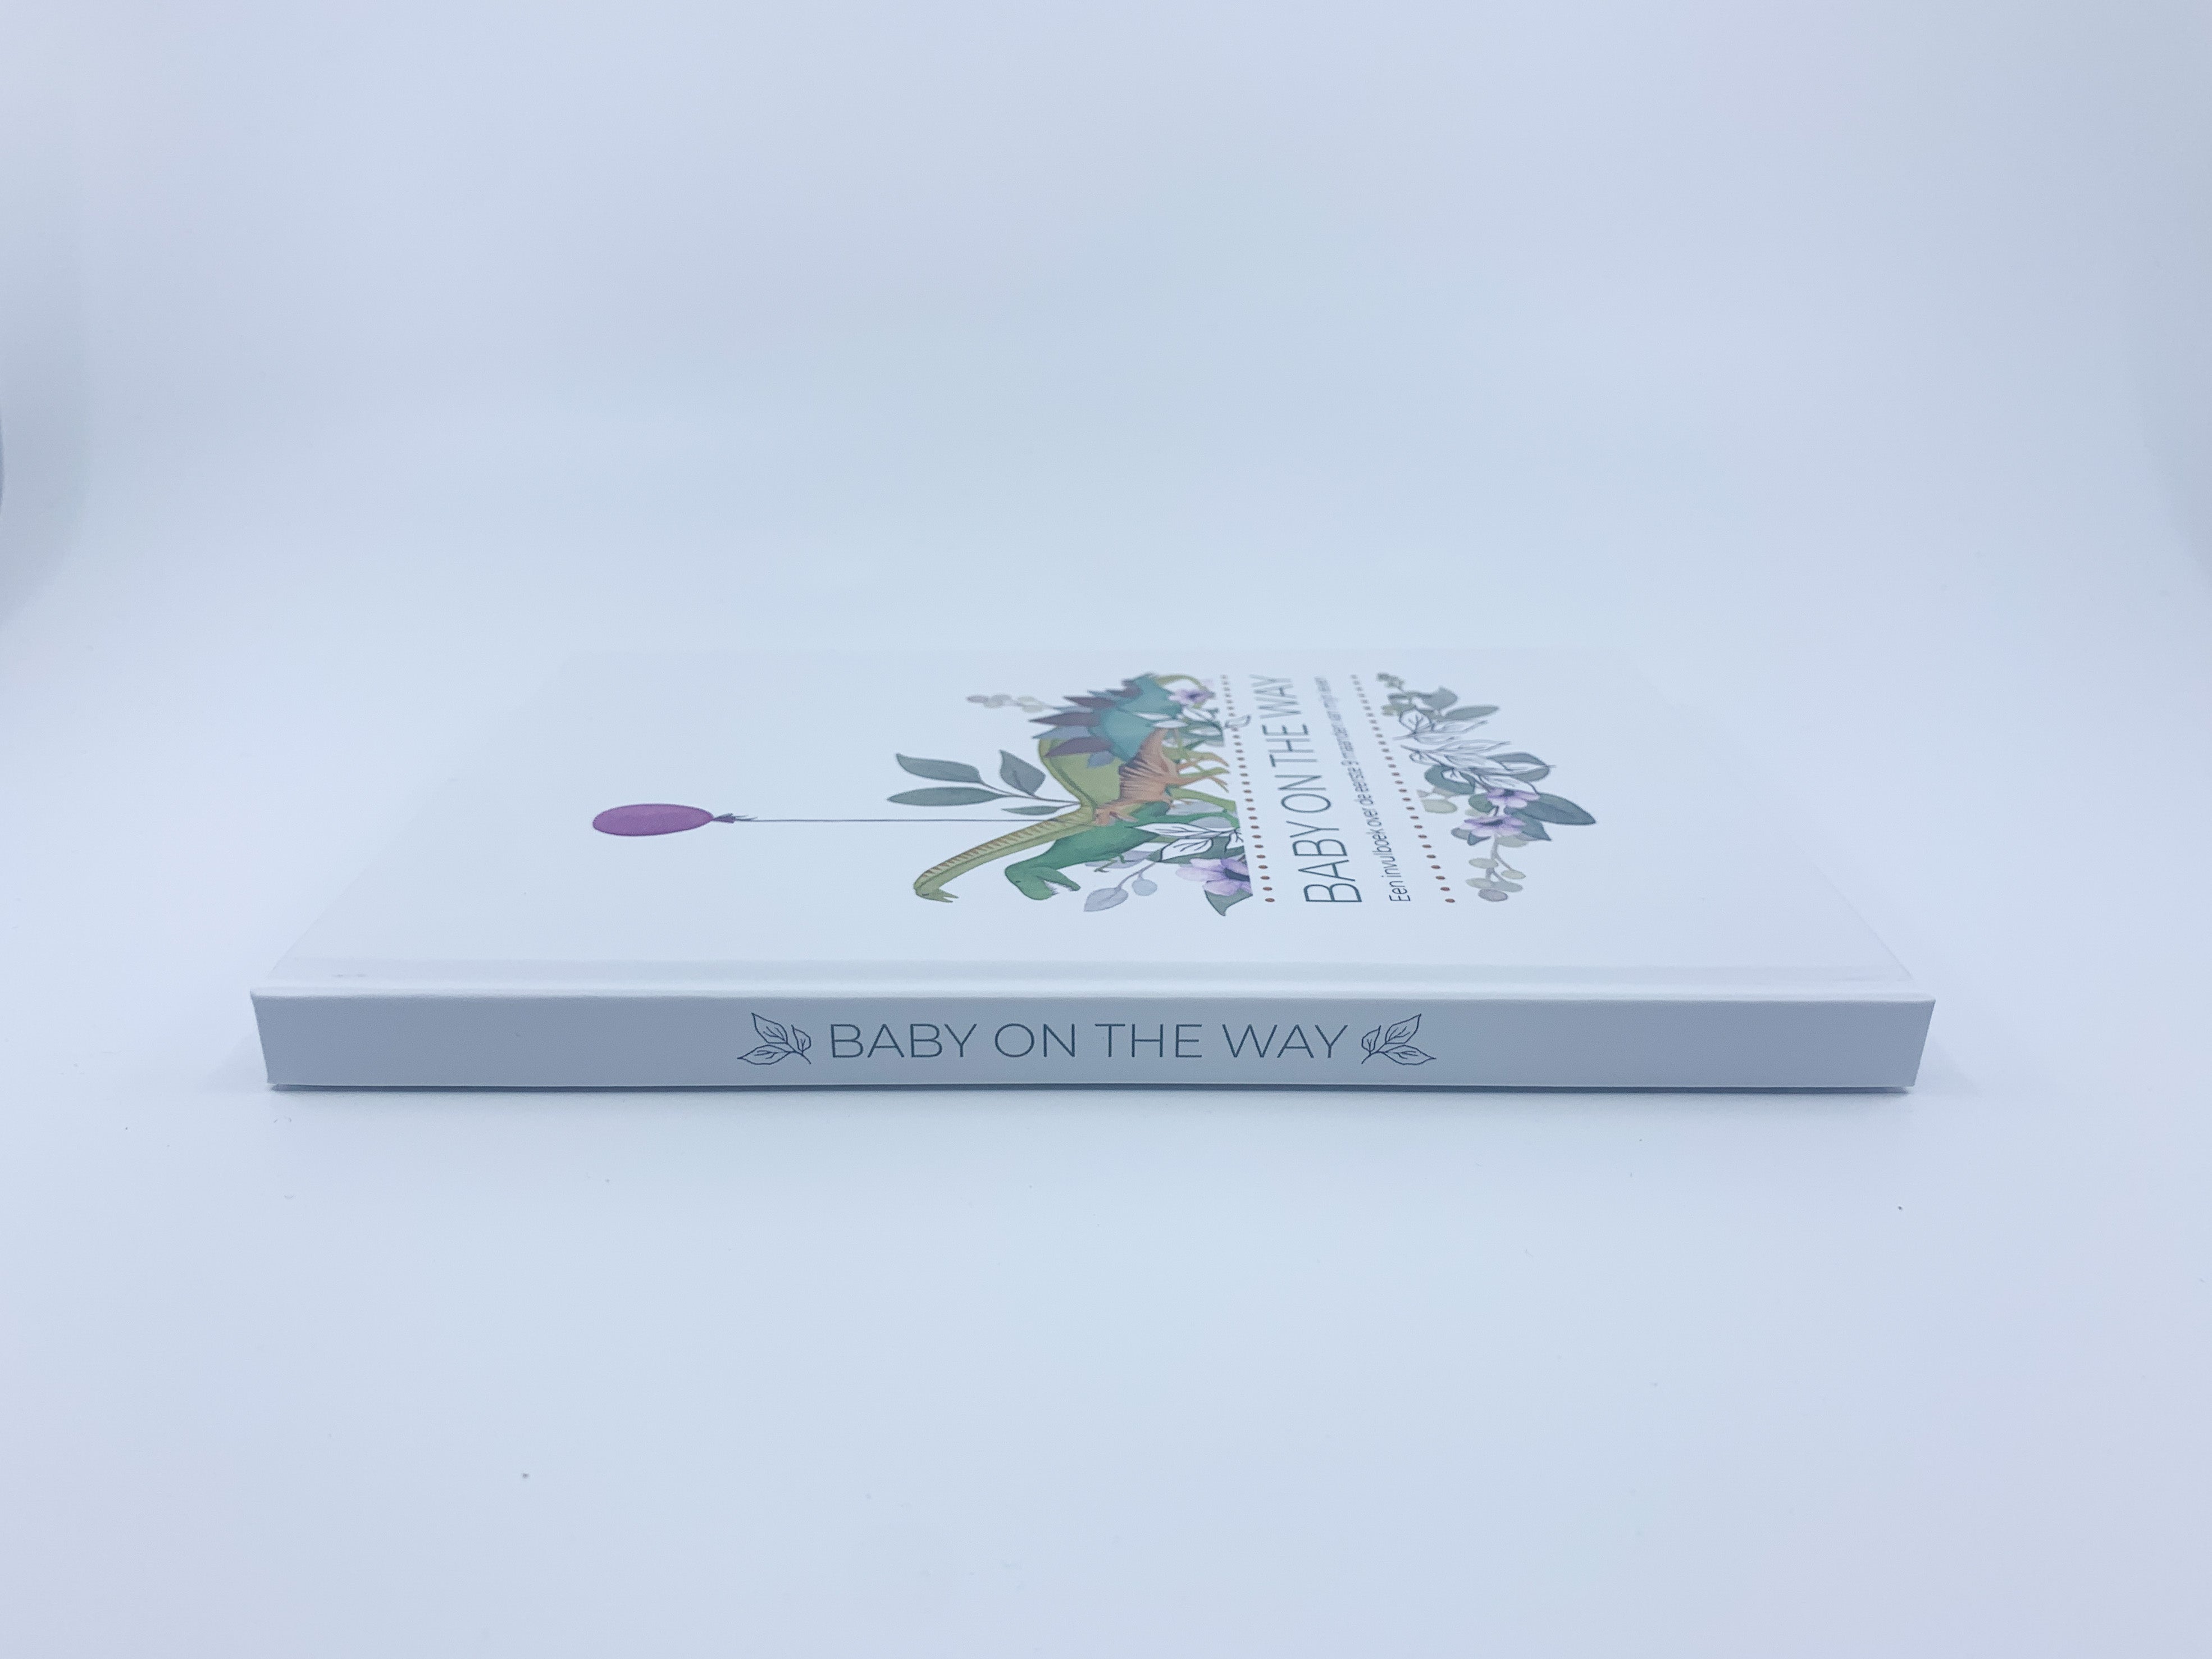 Invulboek zwangerschap ‘Baby on the Way’ - Dino